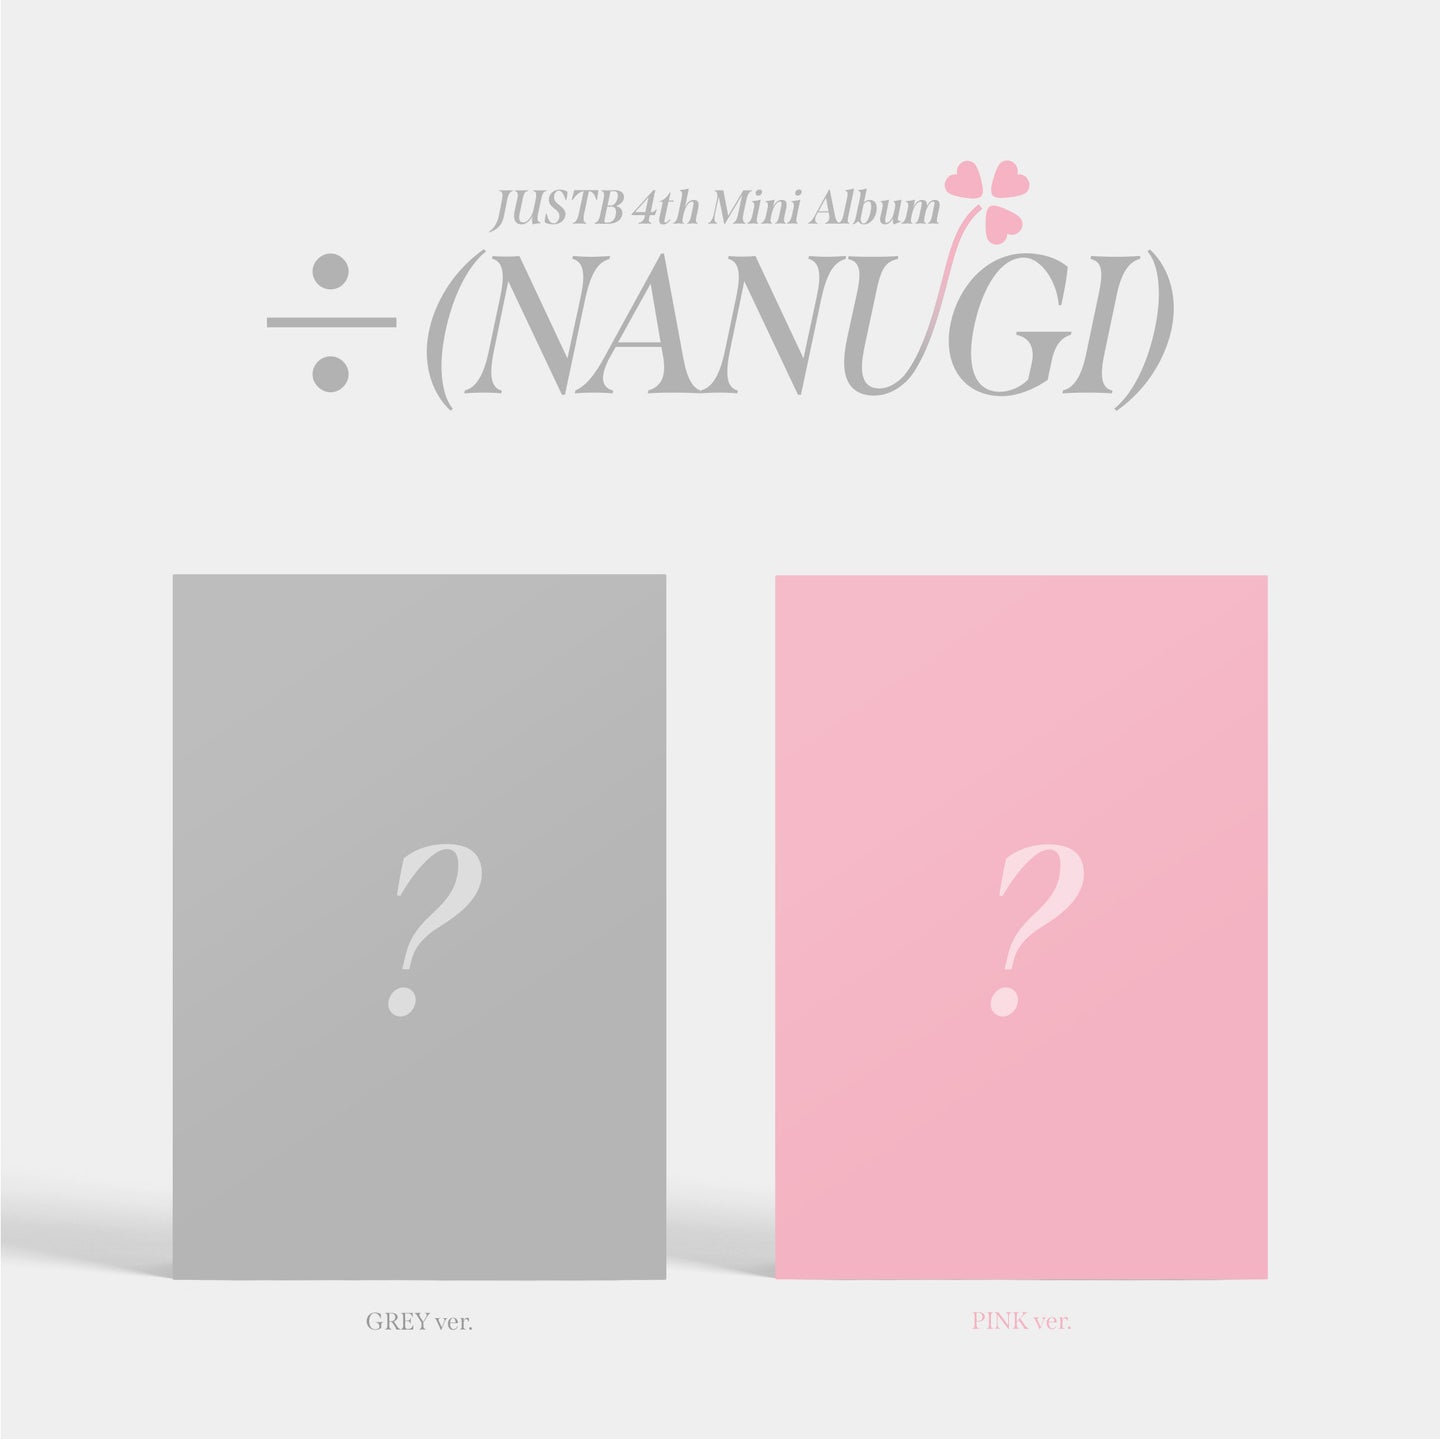 JUST B Mini Album Vol. 4 – ÷ (NANUGI) (Random)